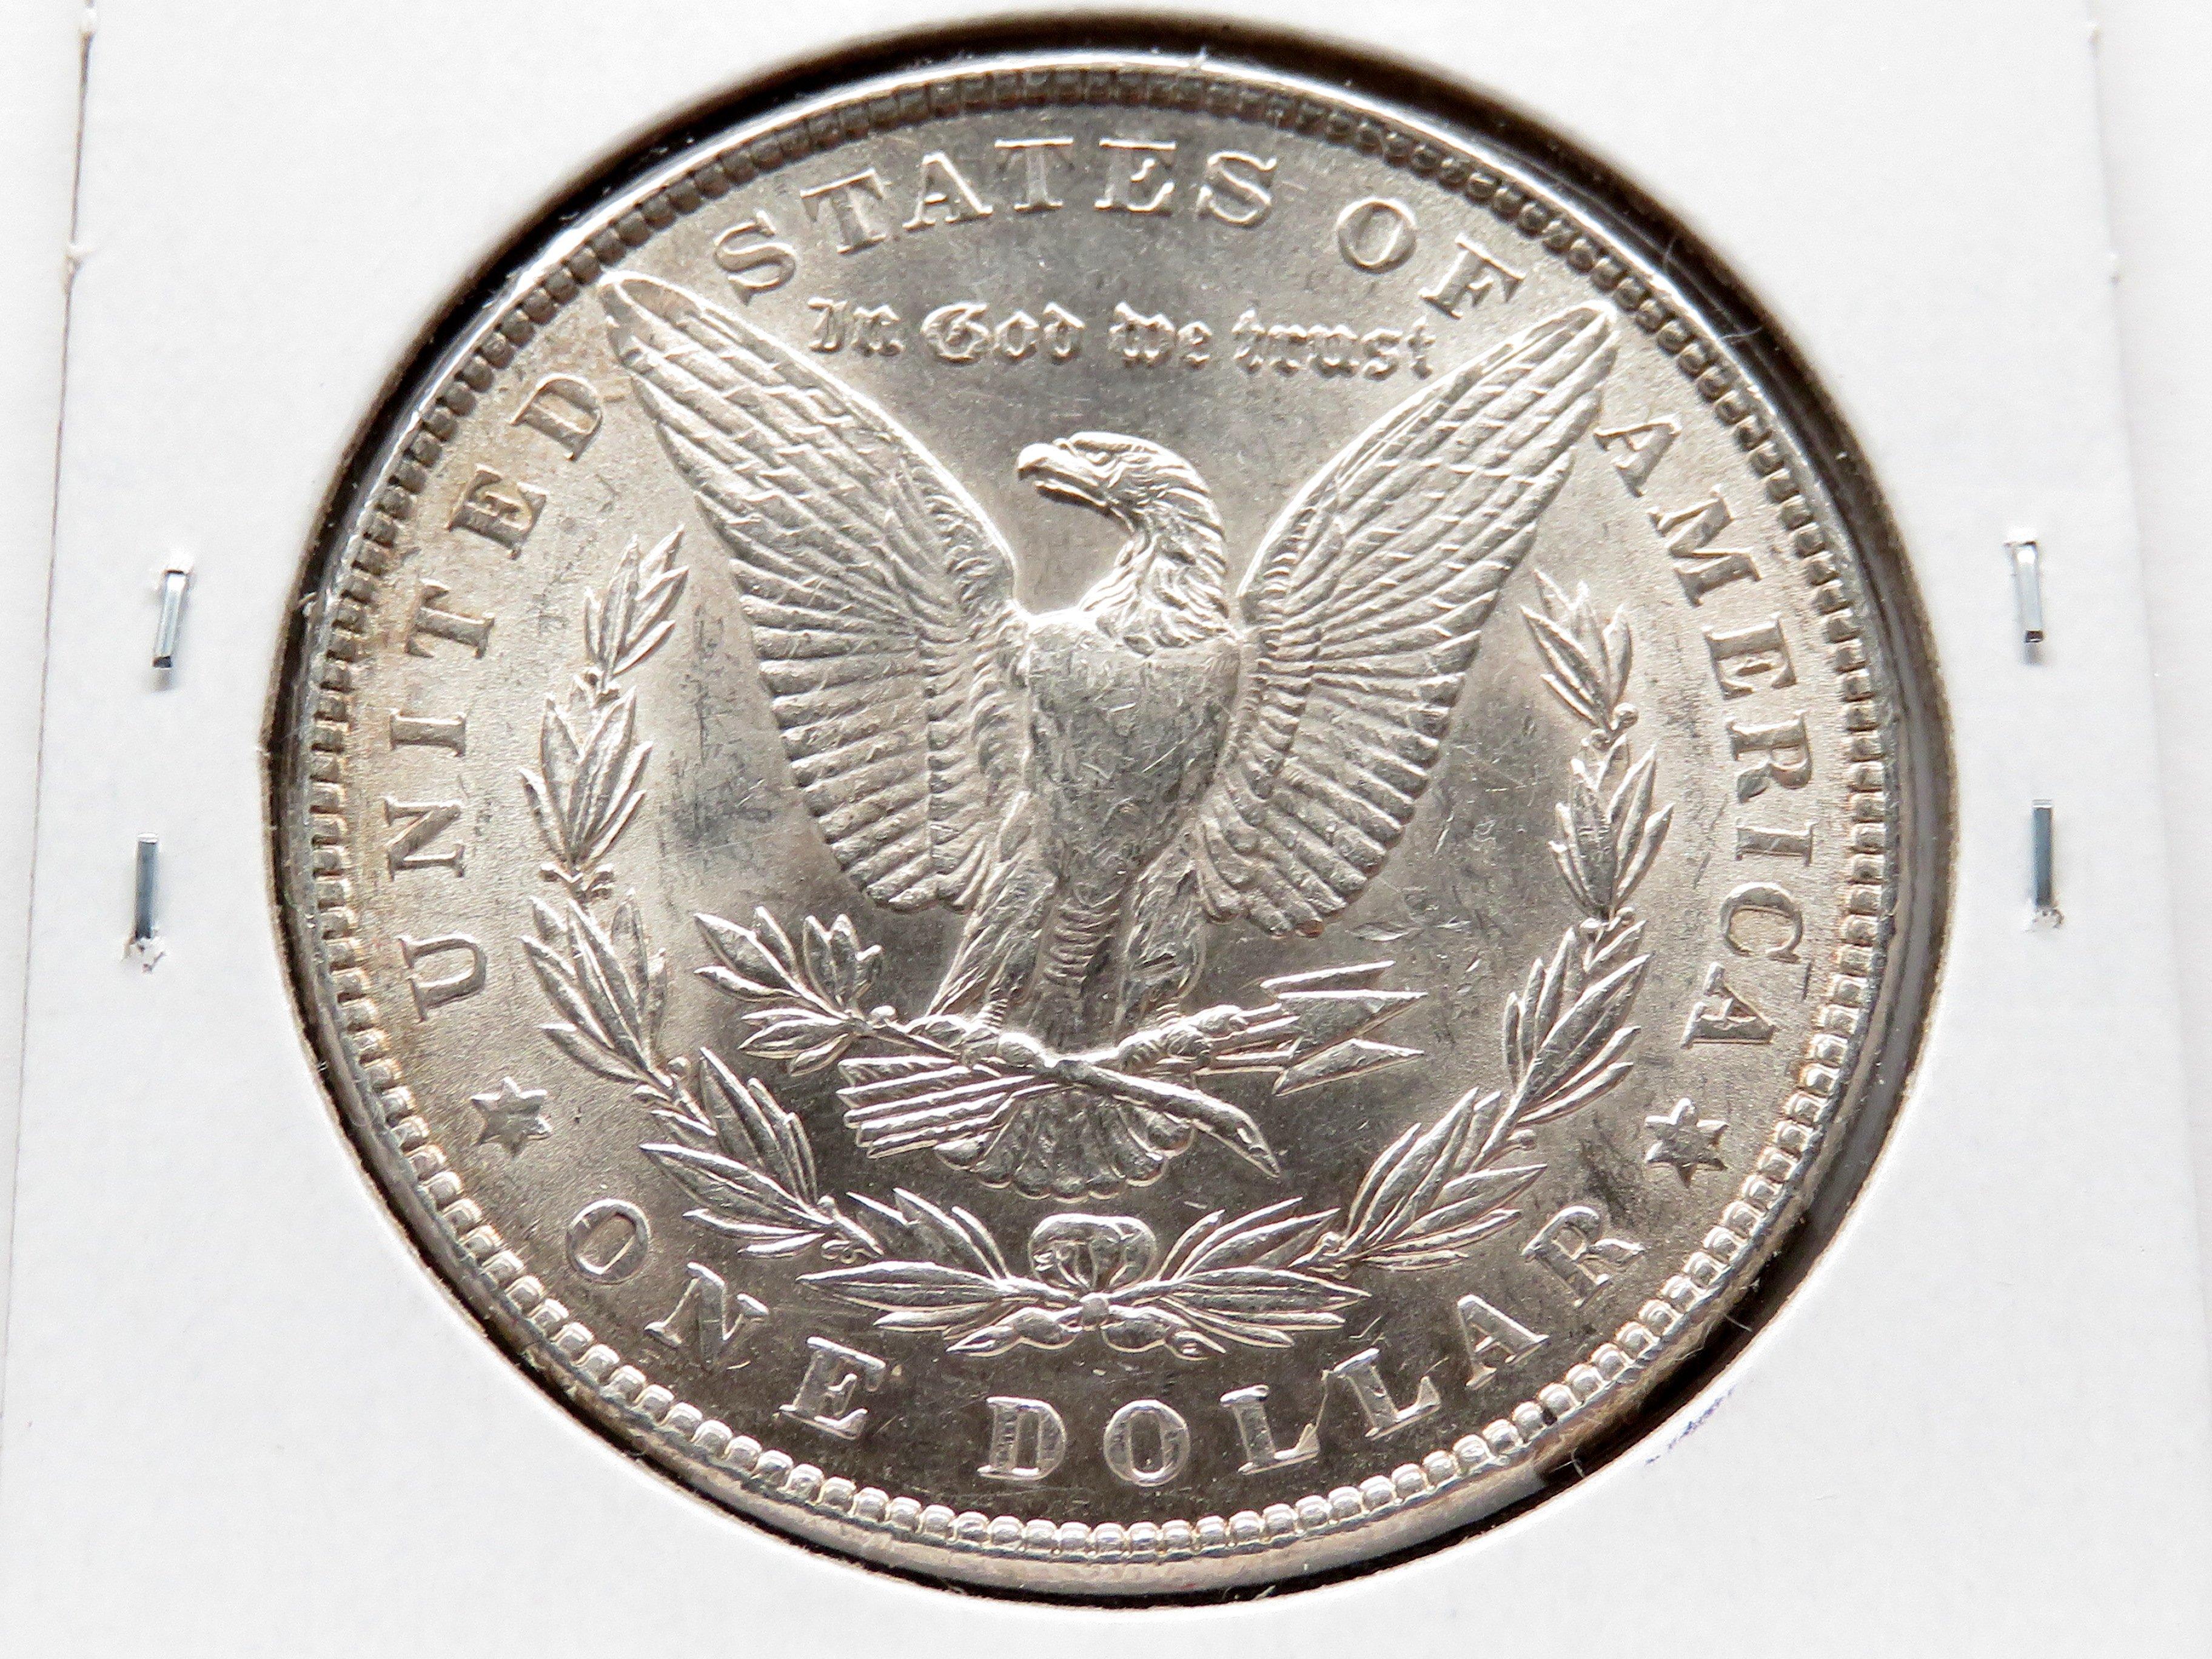 Morgan $ 1886 BU